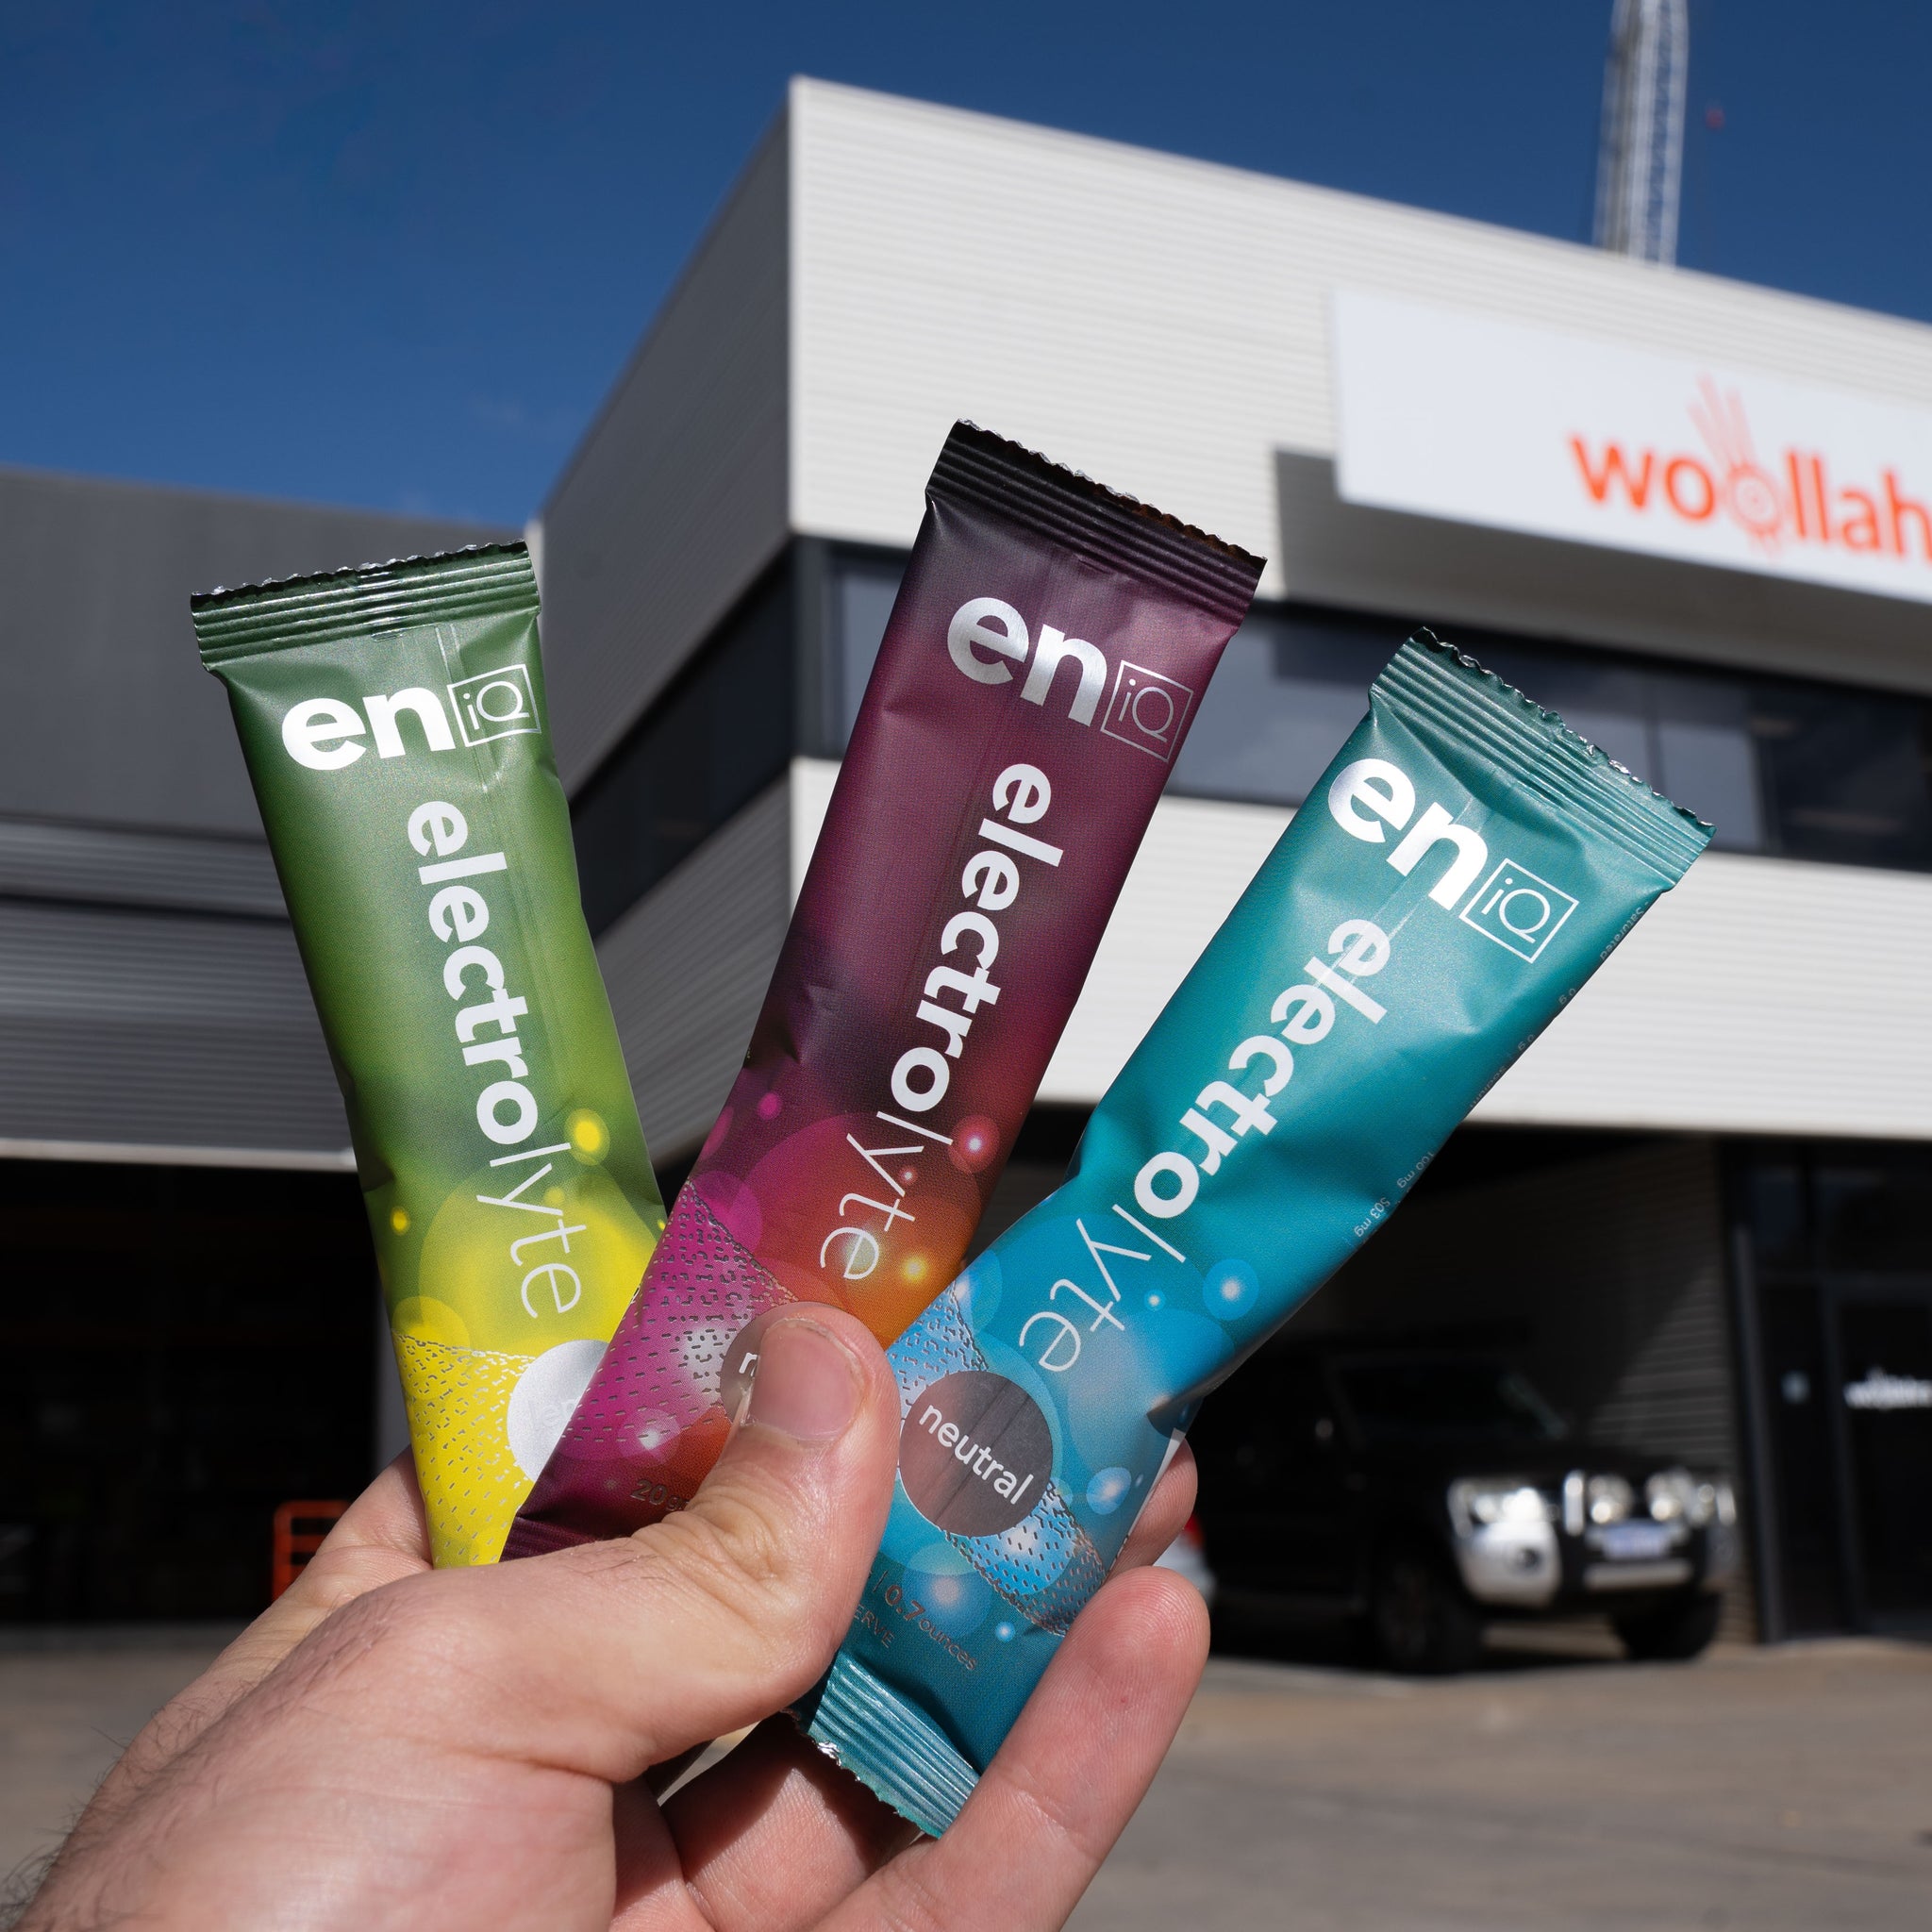 Introducing eniQ new range of electrolytes through Woollahra!